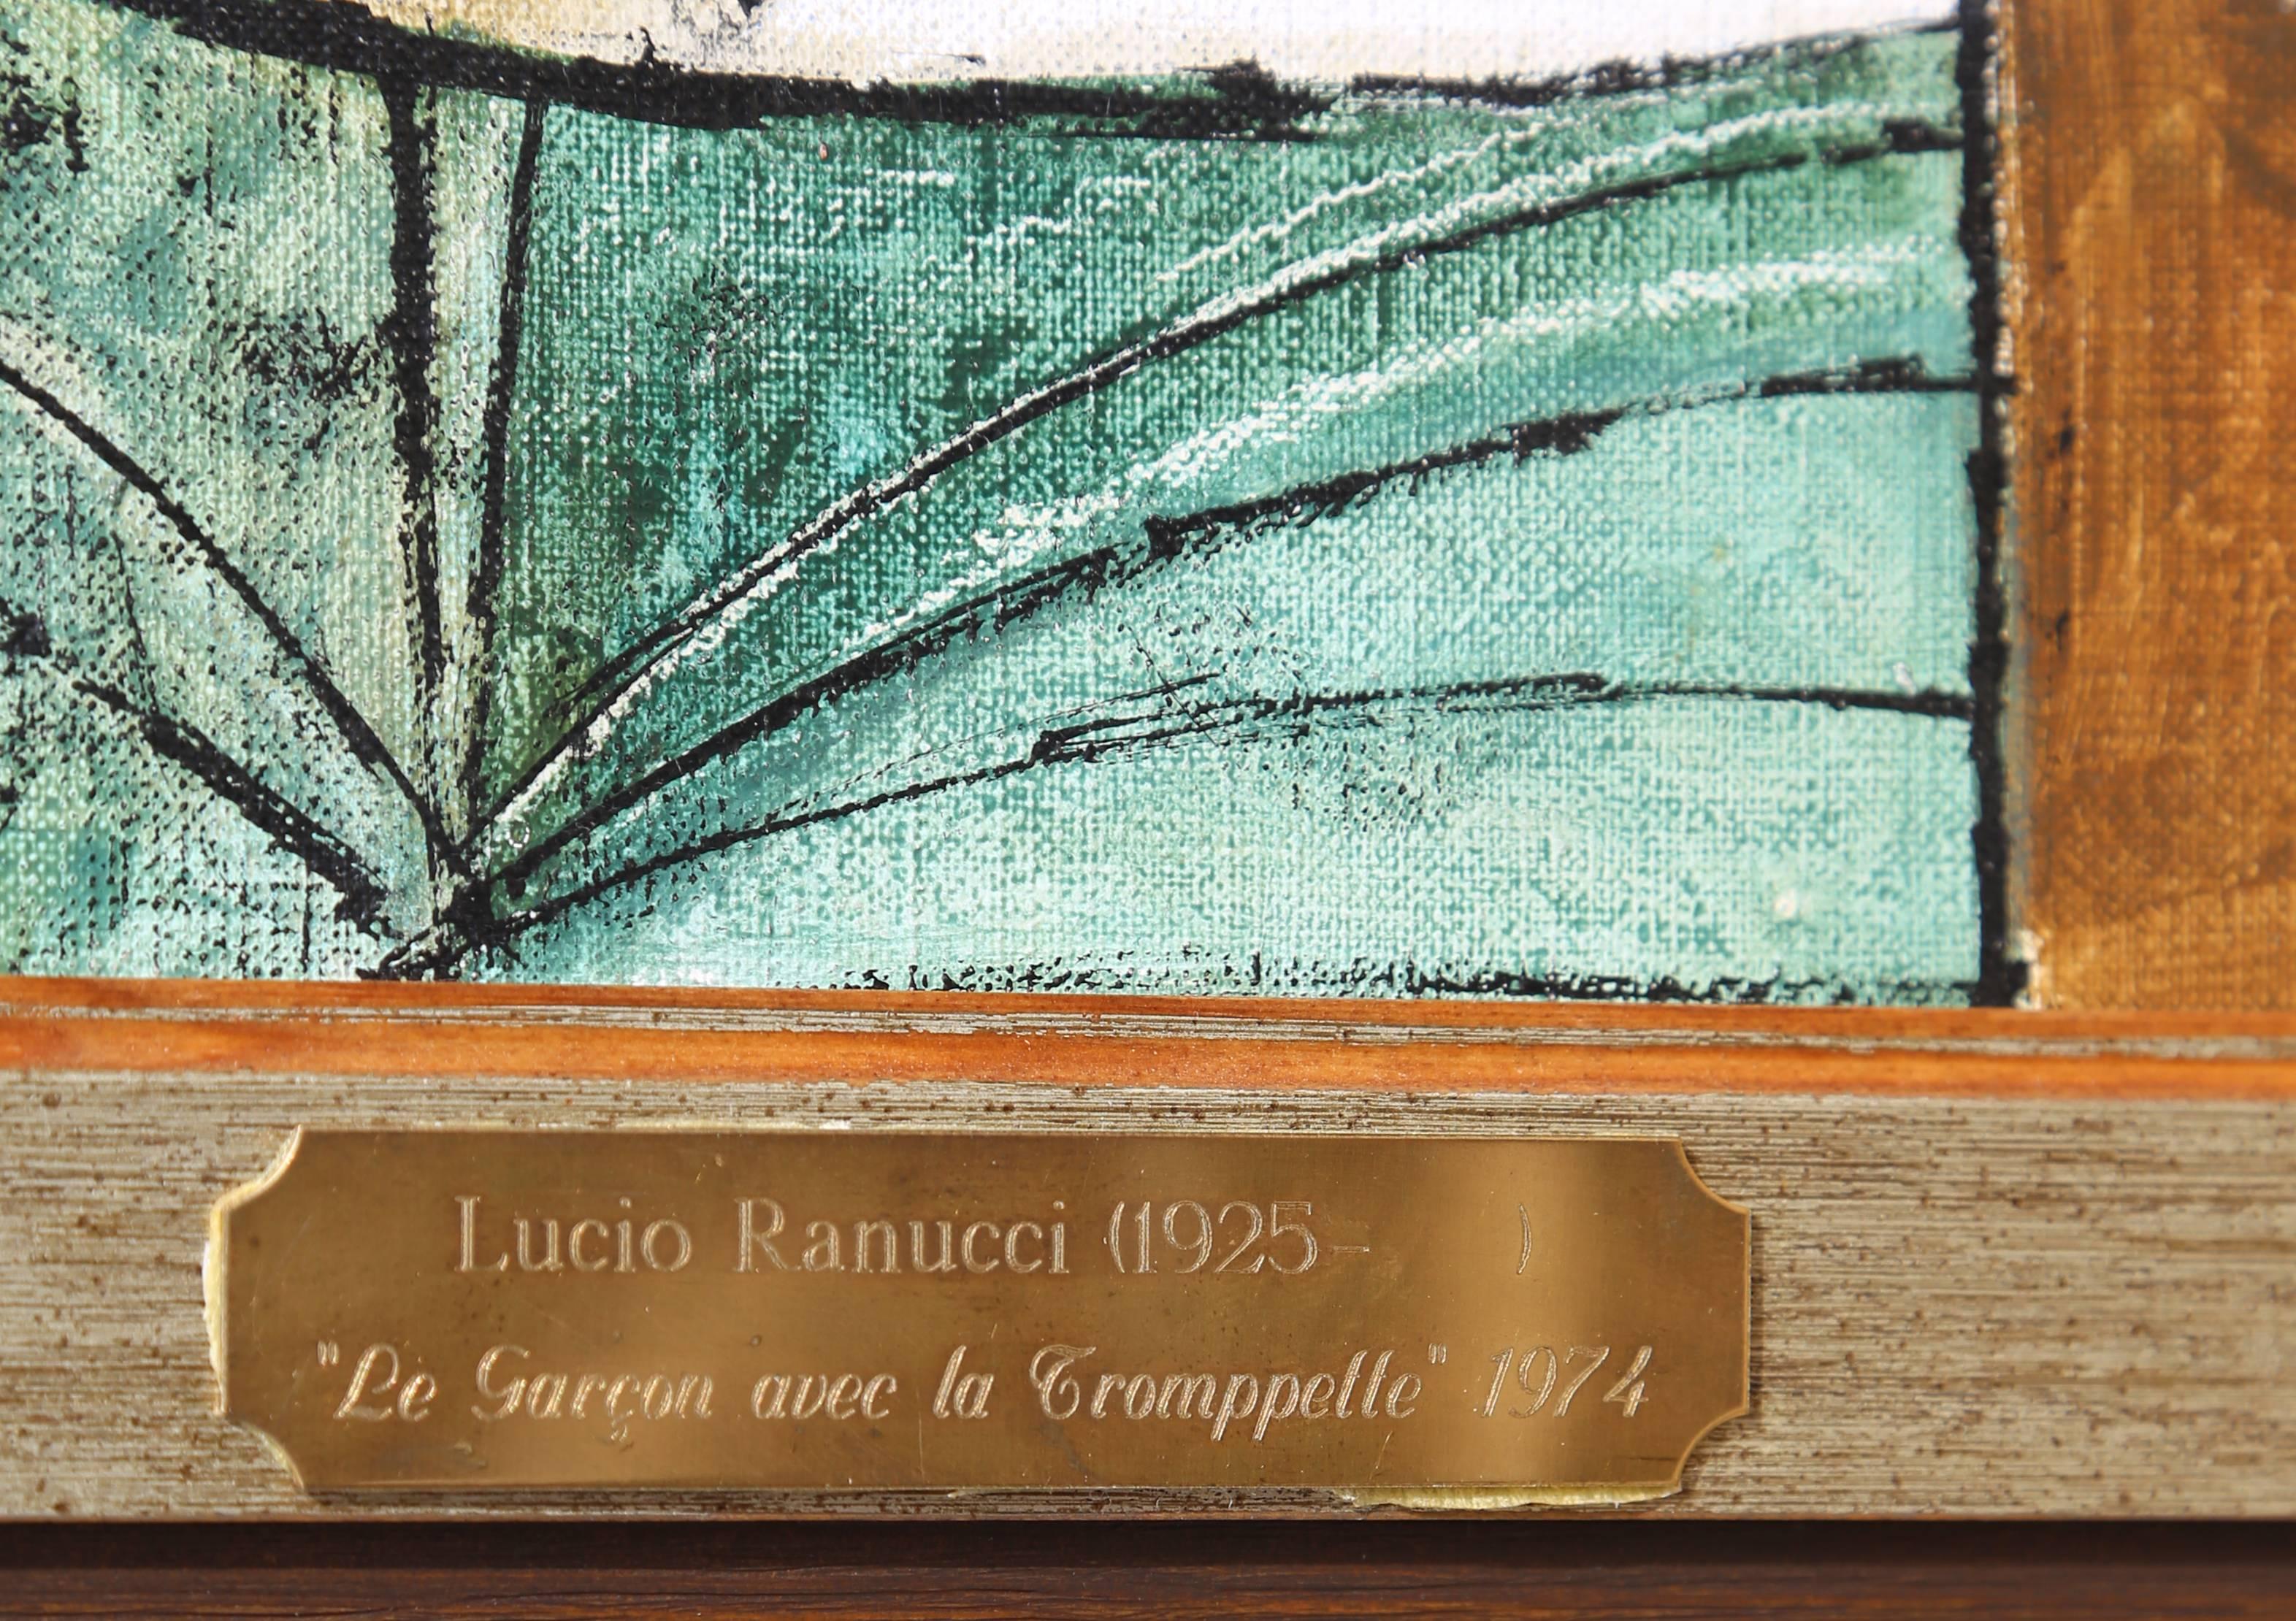 Artist: Lucio Ranucci, Italian (1925 - )
Title: Trumpeter
Year: 1974
Medium: Oil on Canvas, signed u.l.
Size: 24 x 36 in. (60.96 x 91.44 cm)
Frame: 27 x 39 inches